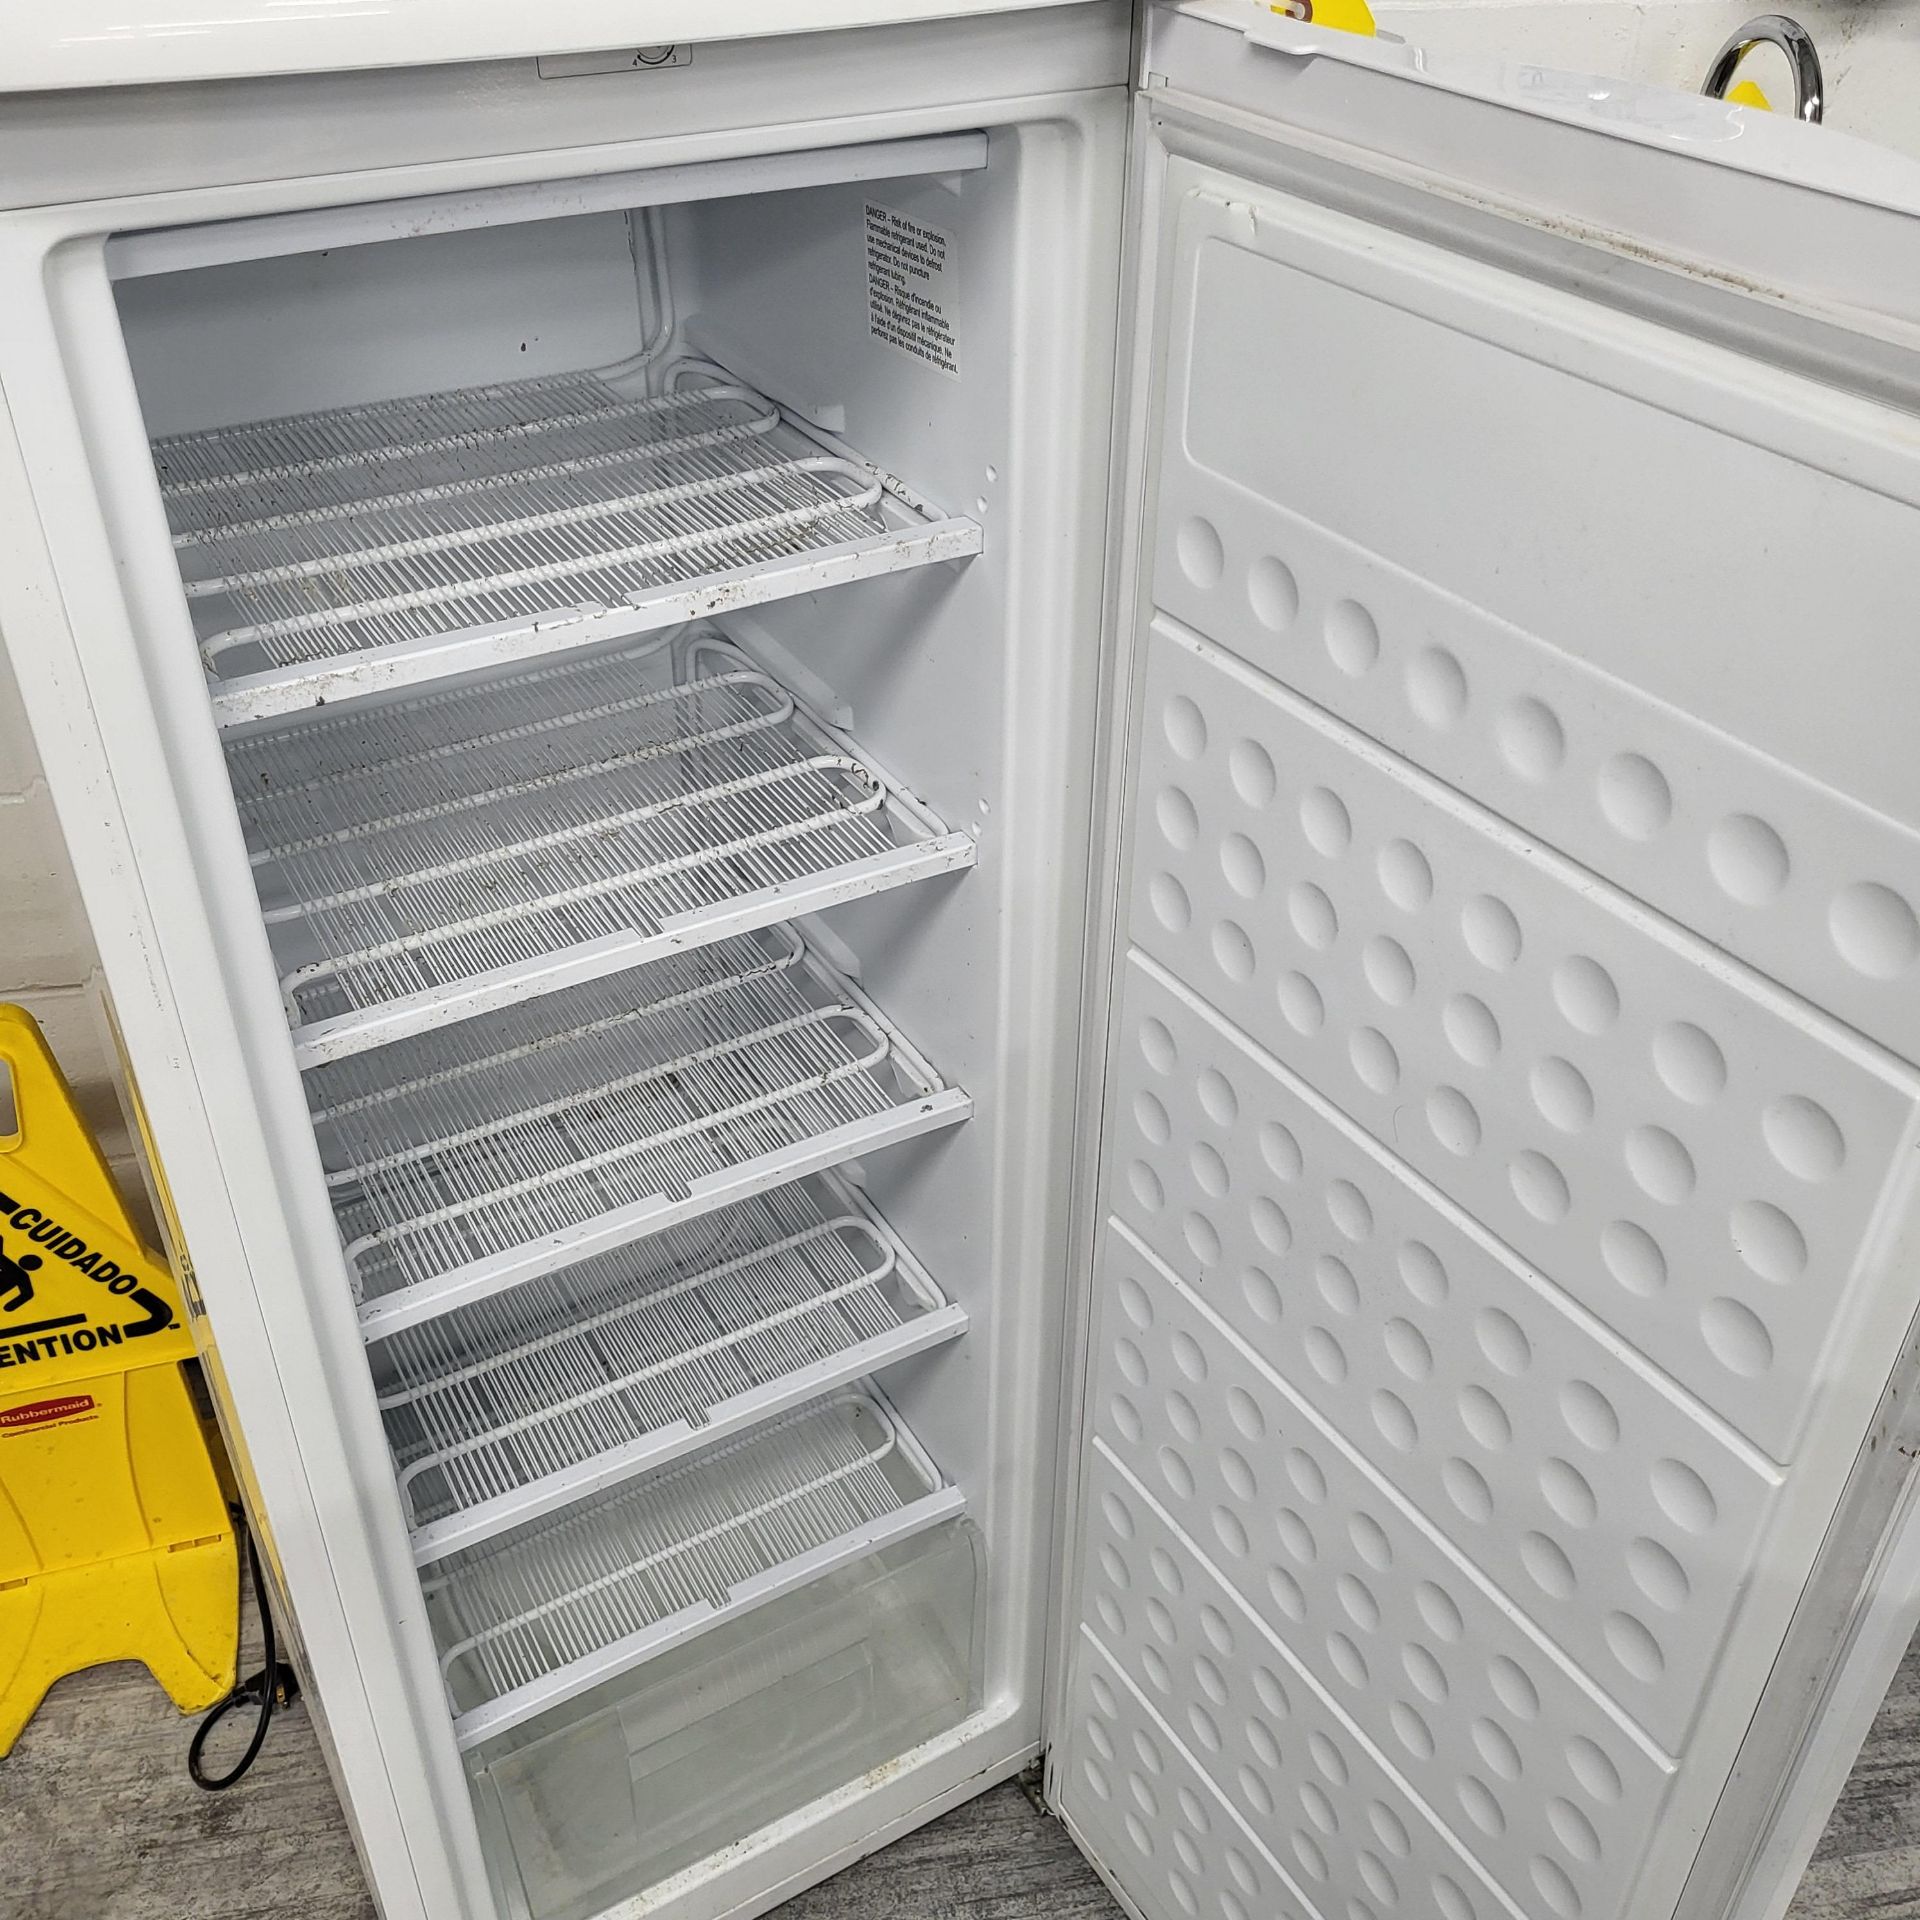 Danby Upright Freezer, 5 shelves - Image 2 of 4